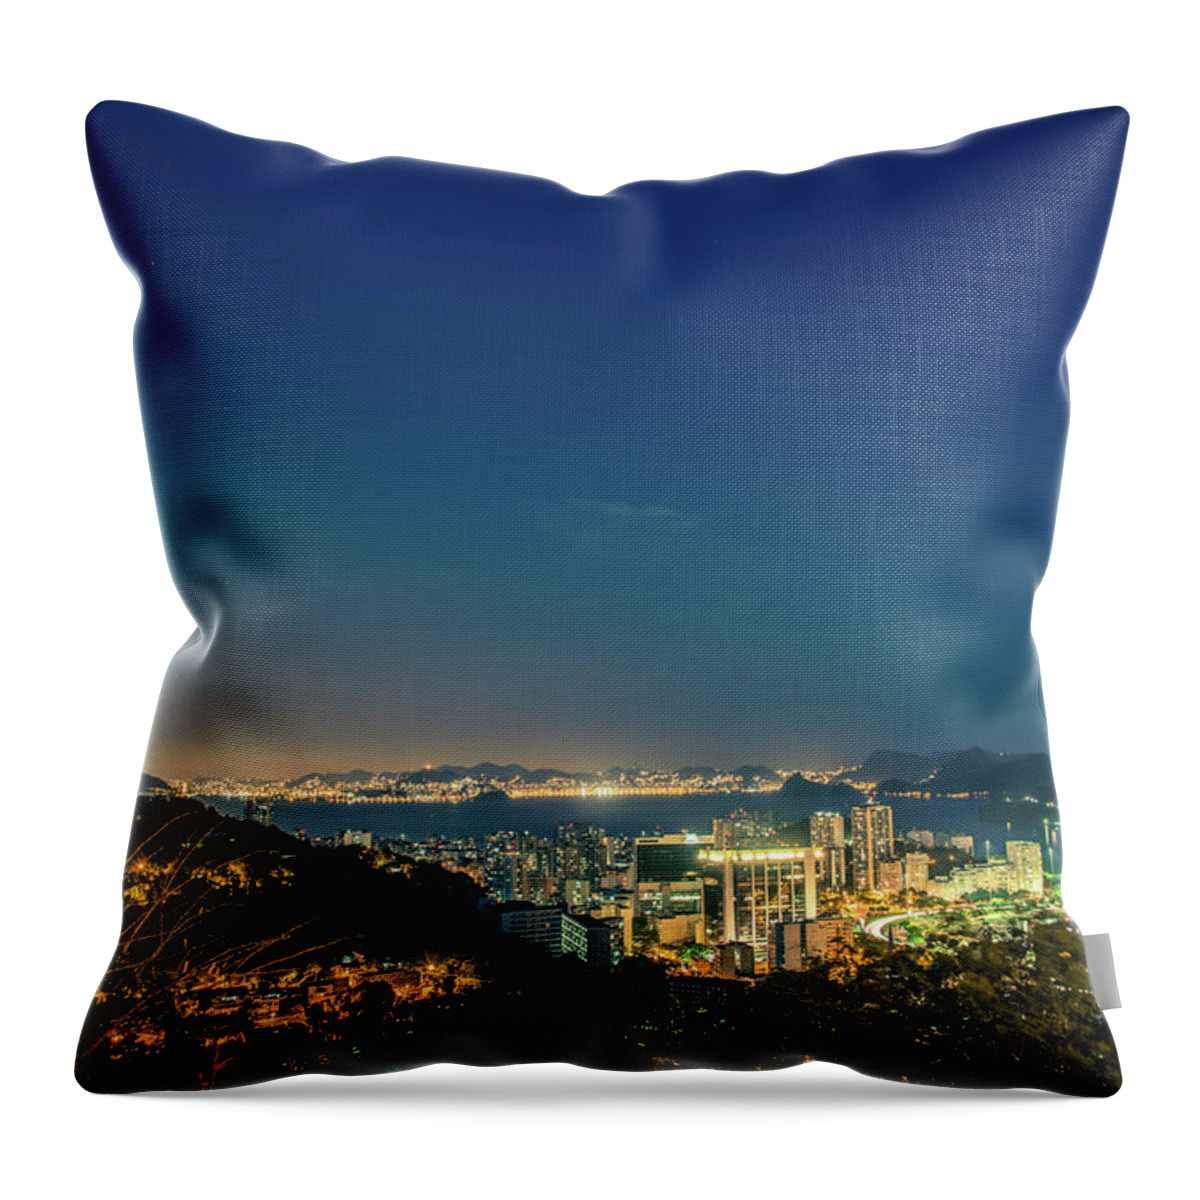 Tranquility Throw Pillow featuring the photograph Rio De Janeiro by José Eduardo Nucci